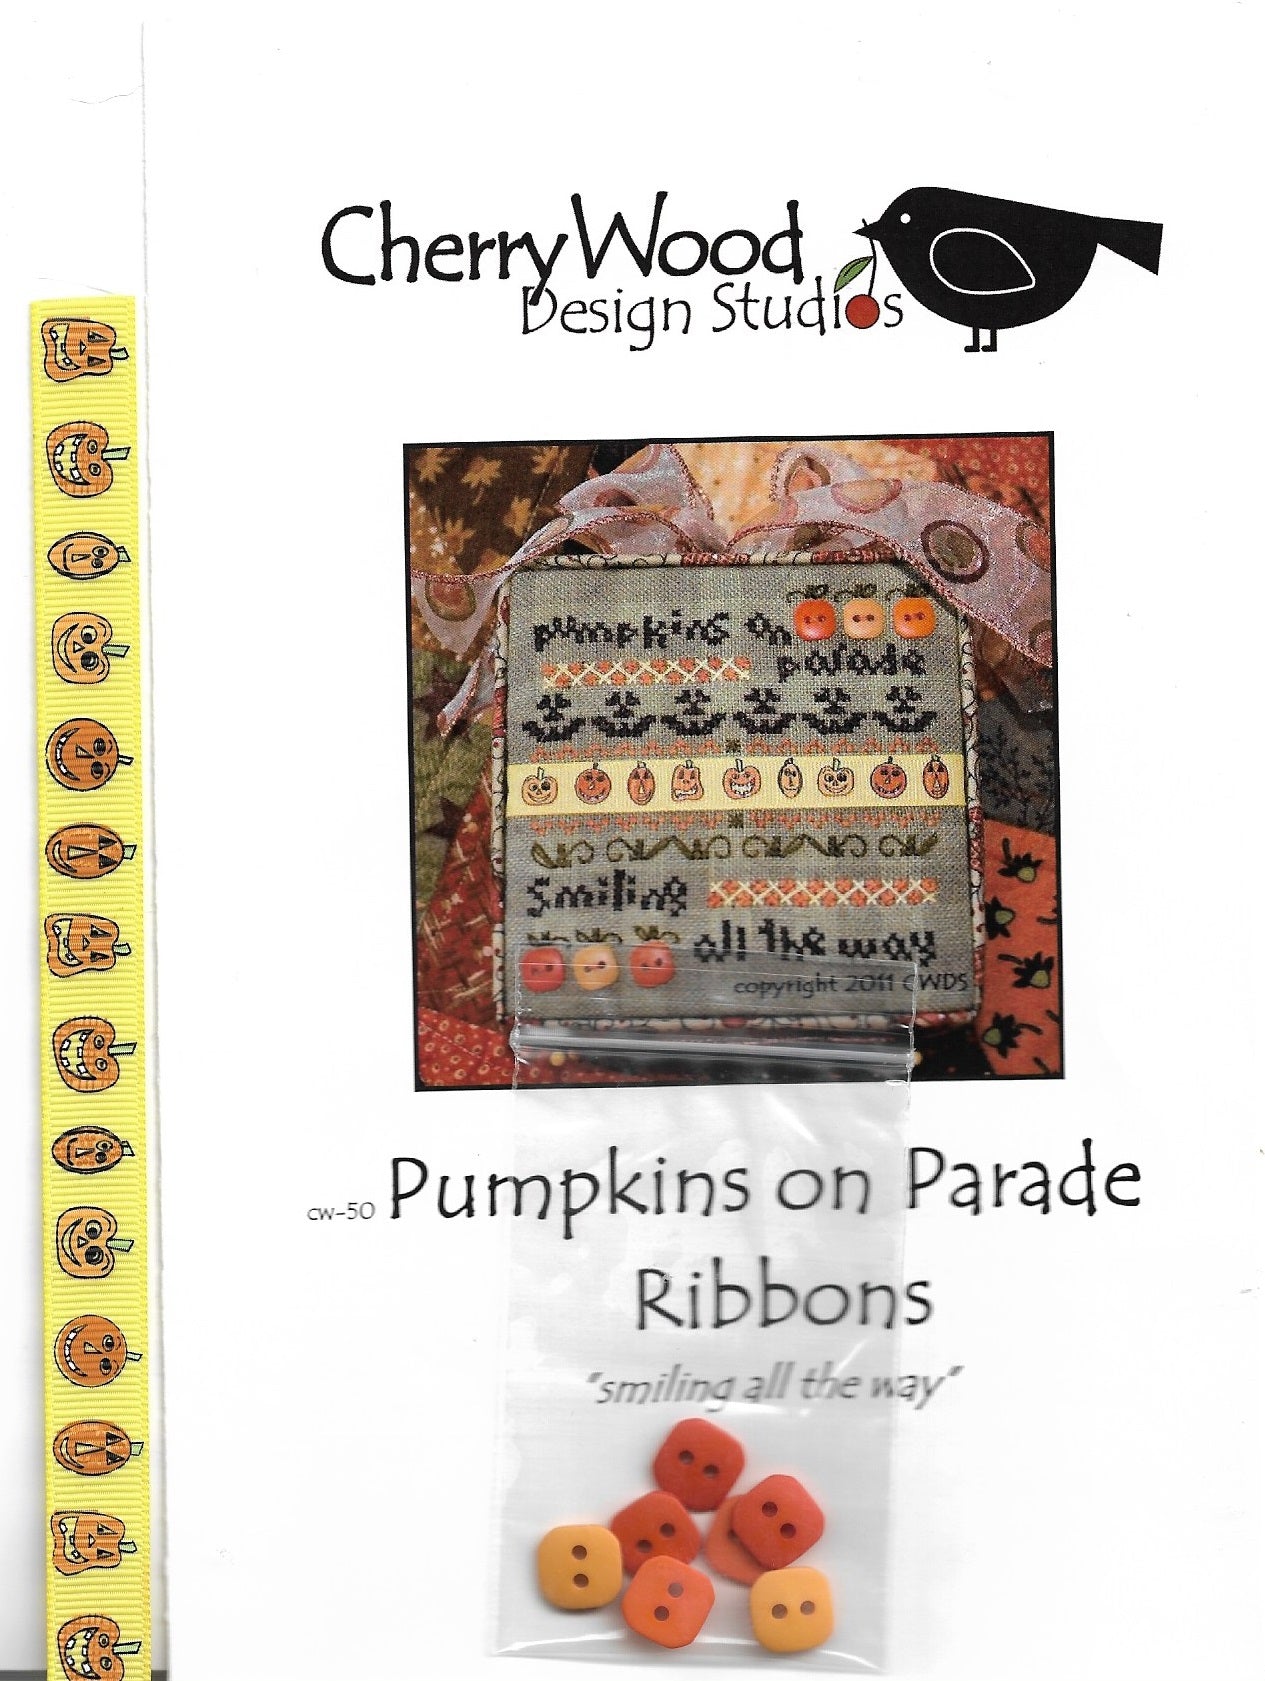 CherryWood Design Studios Pumpkins on Parade Ribbons halloween cross stitch pattern